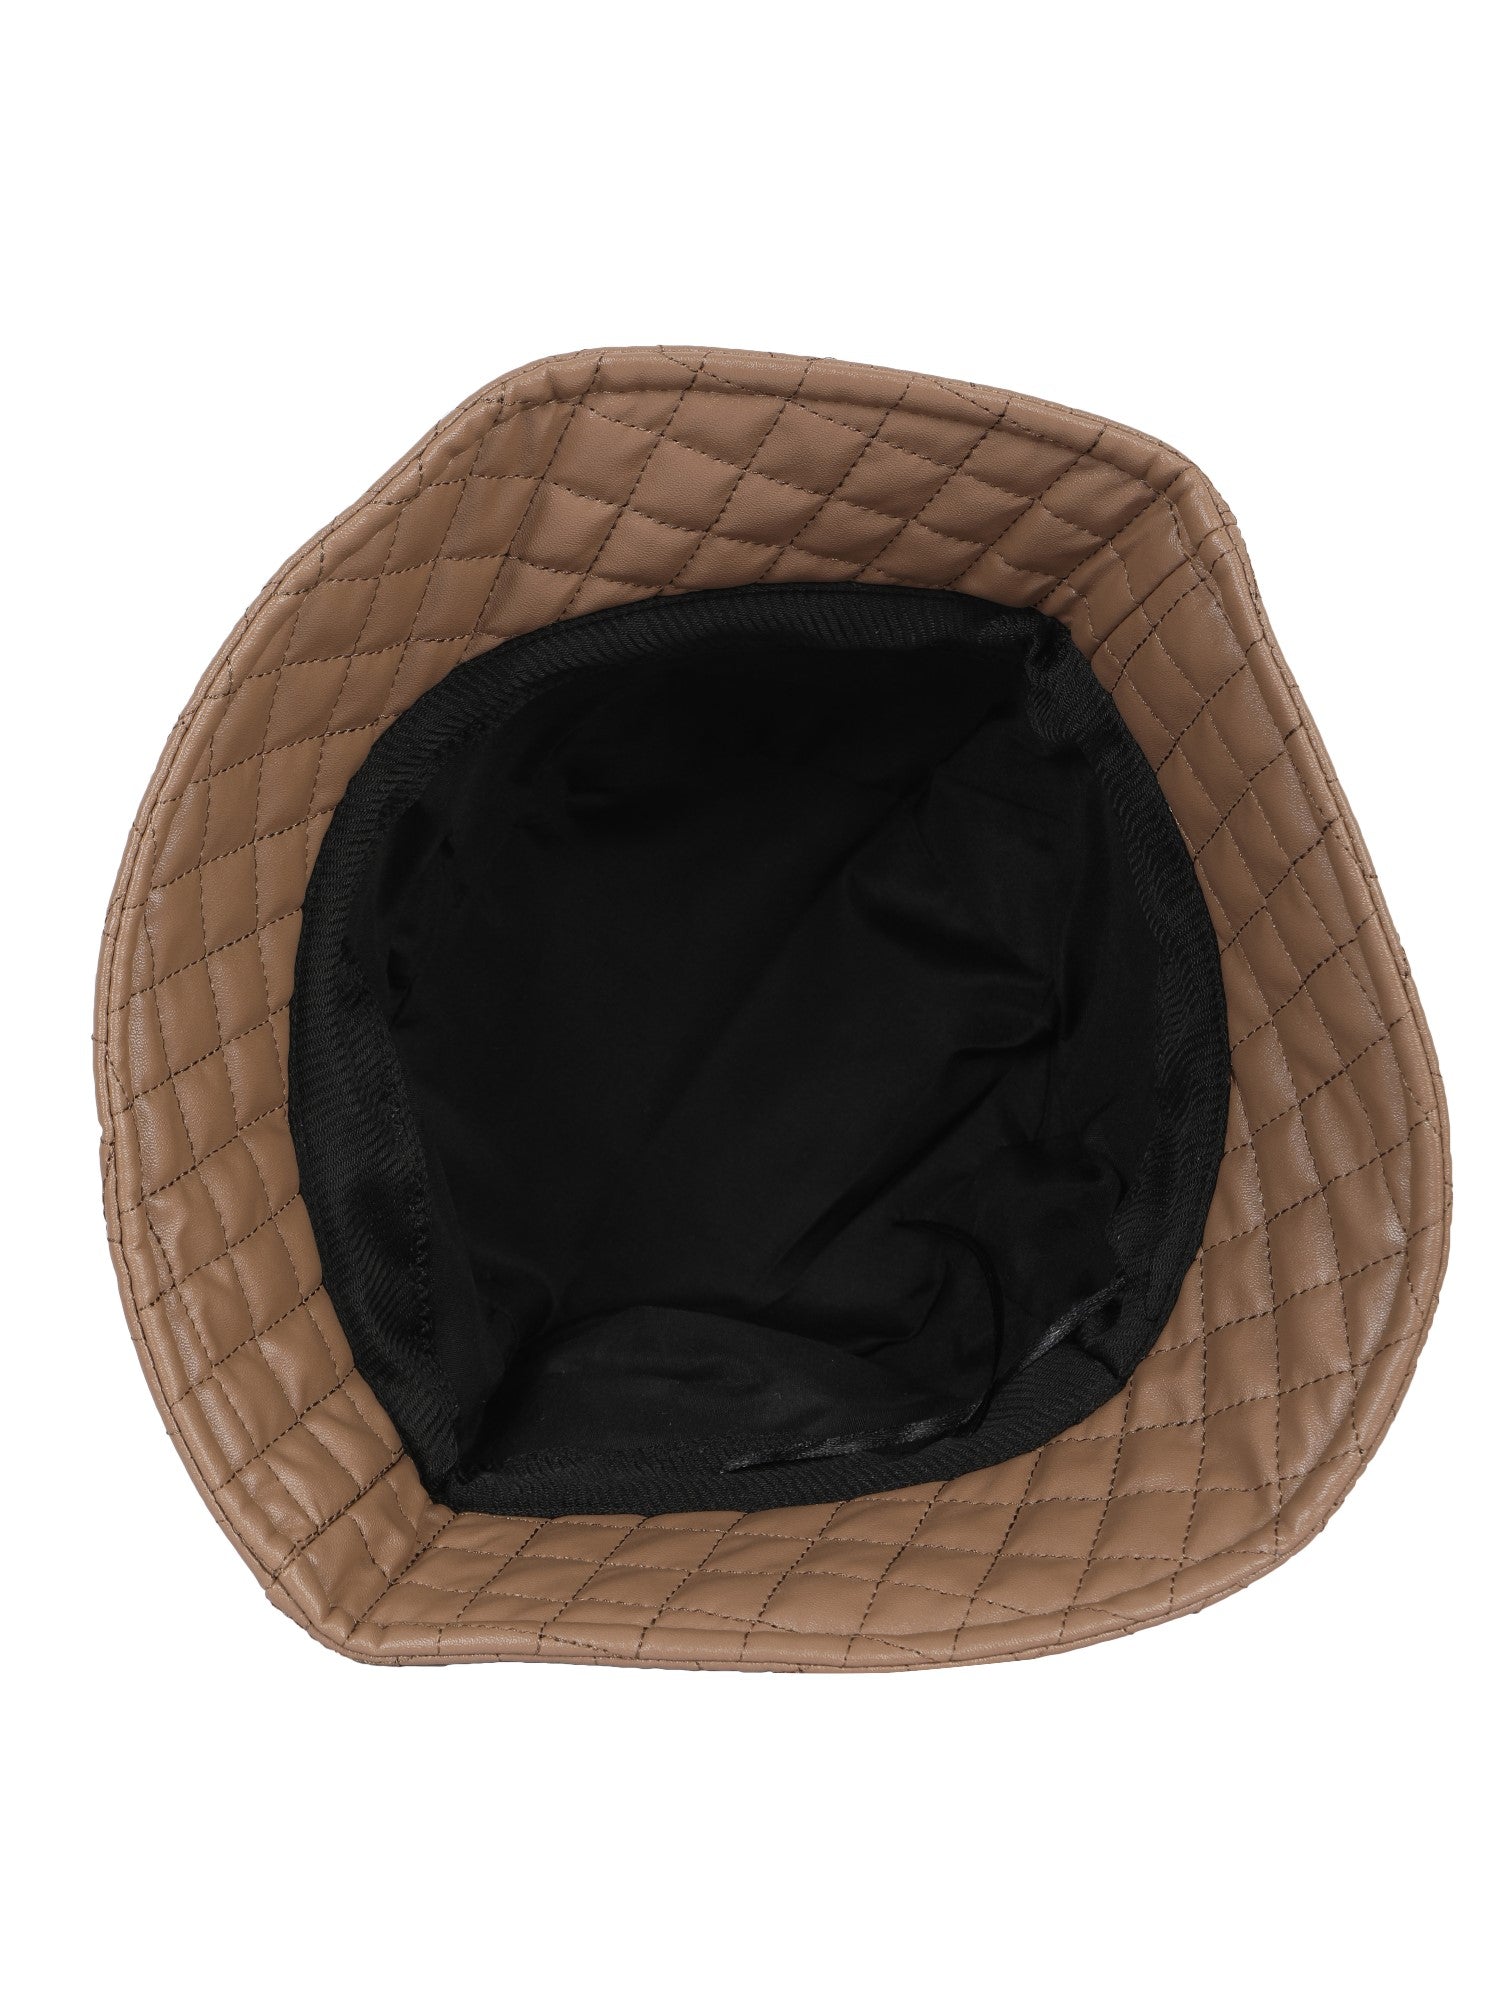 Runquan Bucket Hat Men Women Solid Fishing Sun Hat Outdoor Folding Hip Hop  Basin size cowboy hat 03 